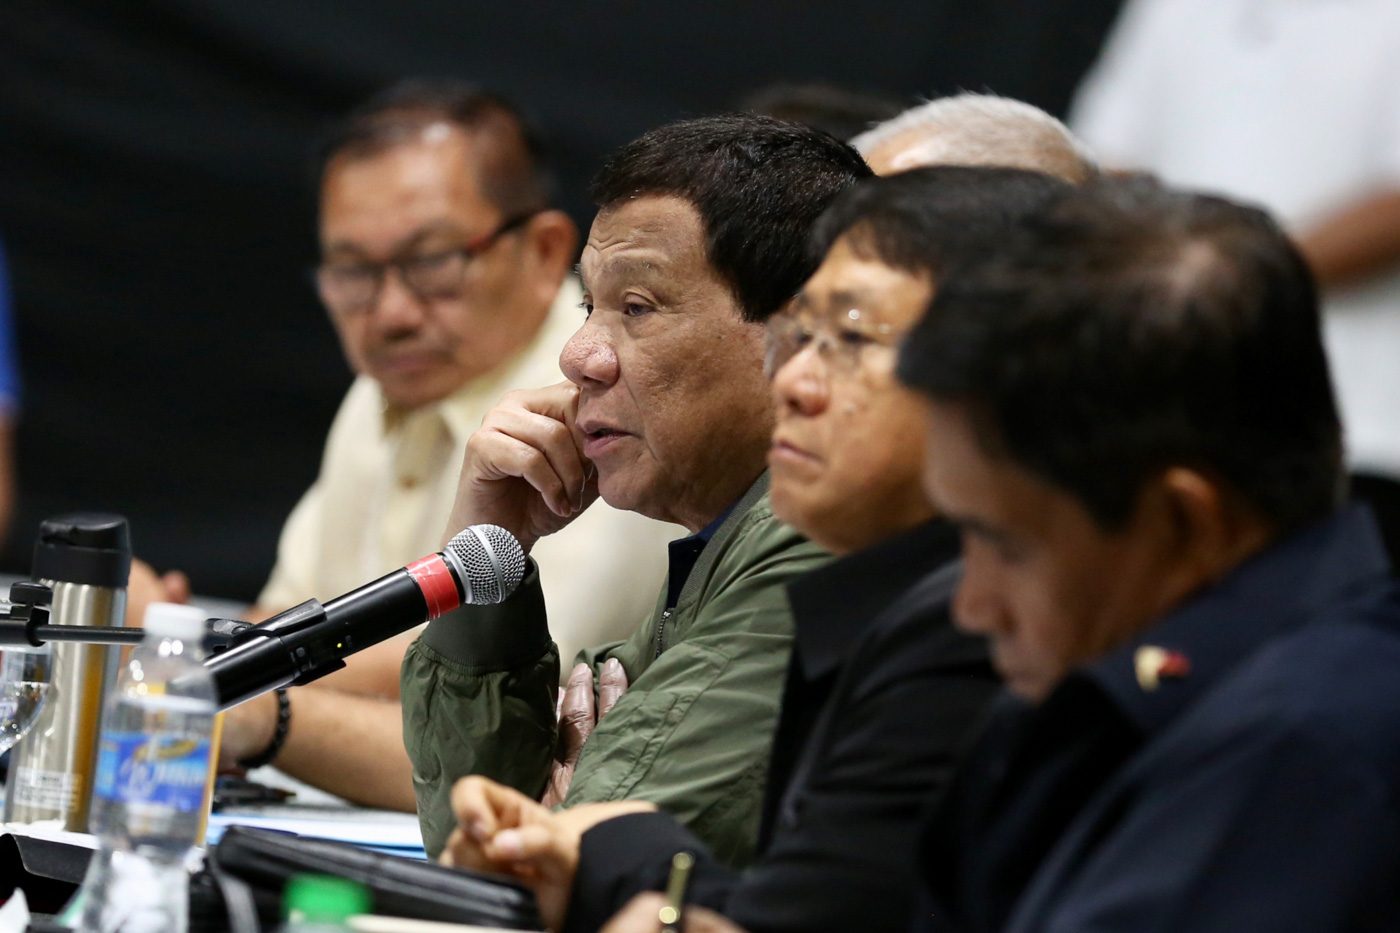 Duterte won’t release list of celebrities into illegal drugs